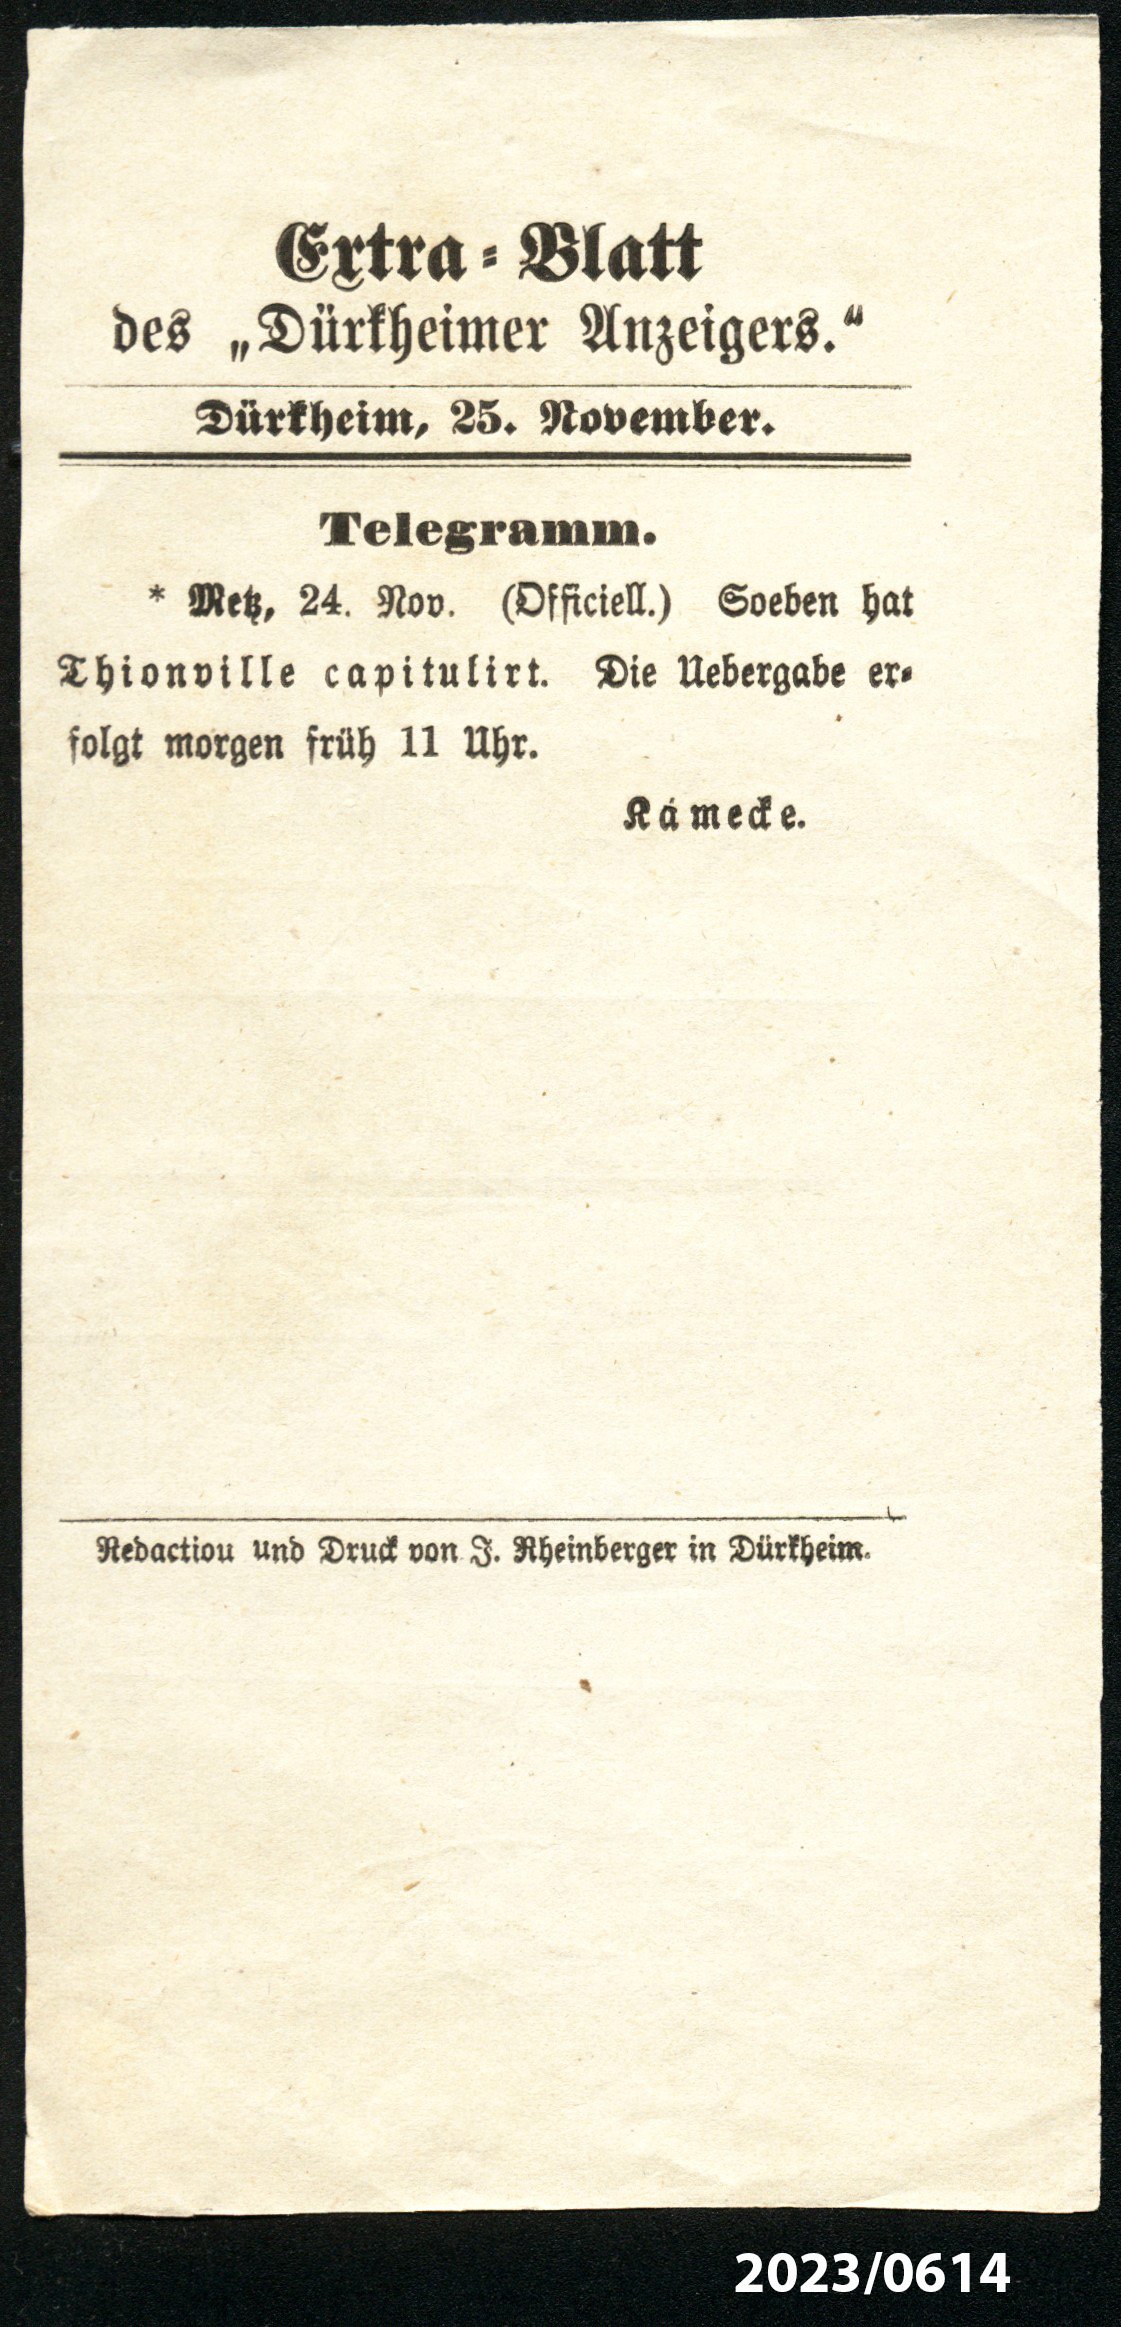 Extra-Blatt des "Dürkheimer Anzeigers" 25.11.1870 (Stadtmuseum Bad Dürkheim im Kulturzentrum Haus Catoir CC BY-NC-SA)